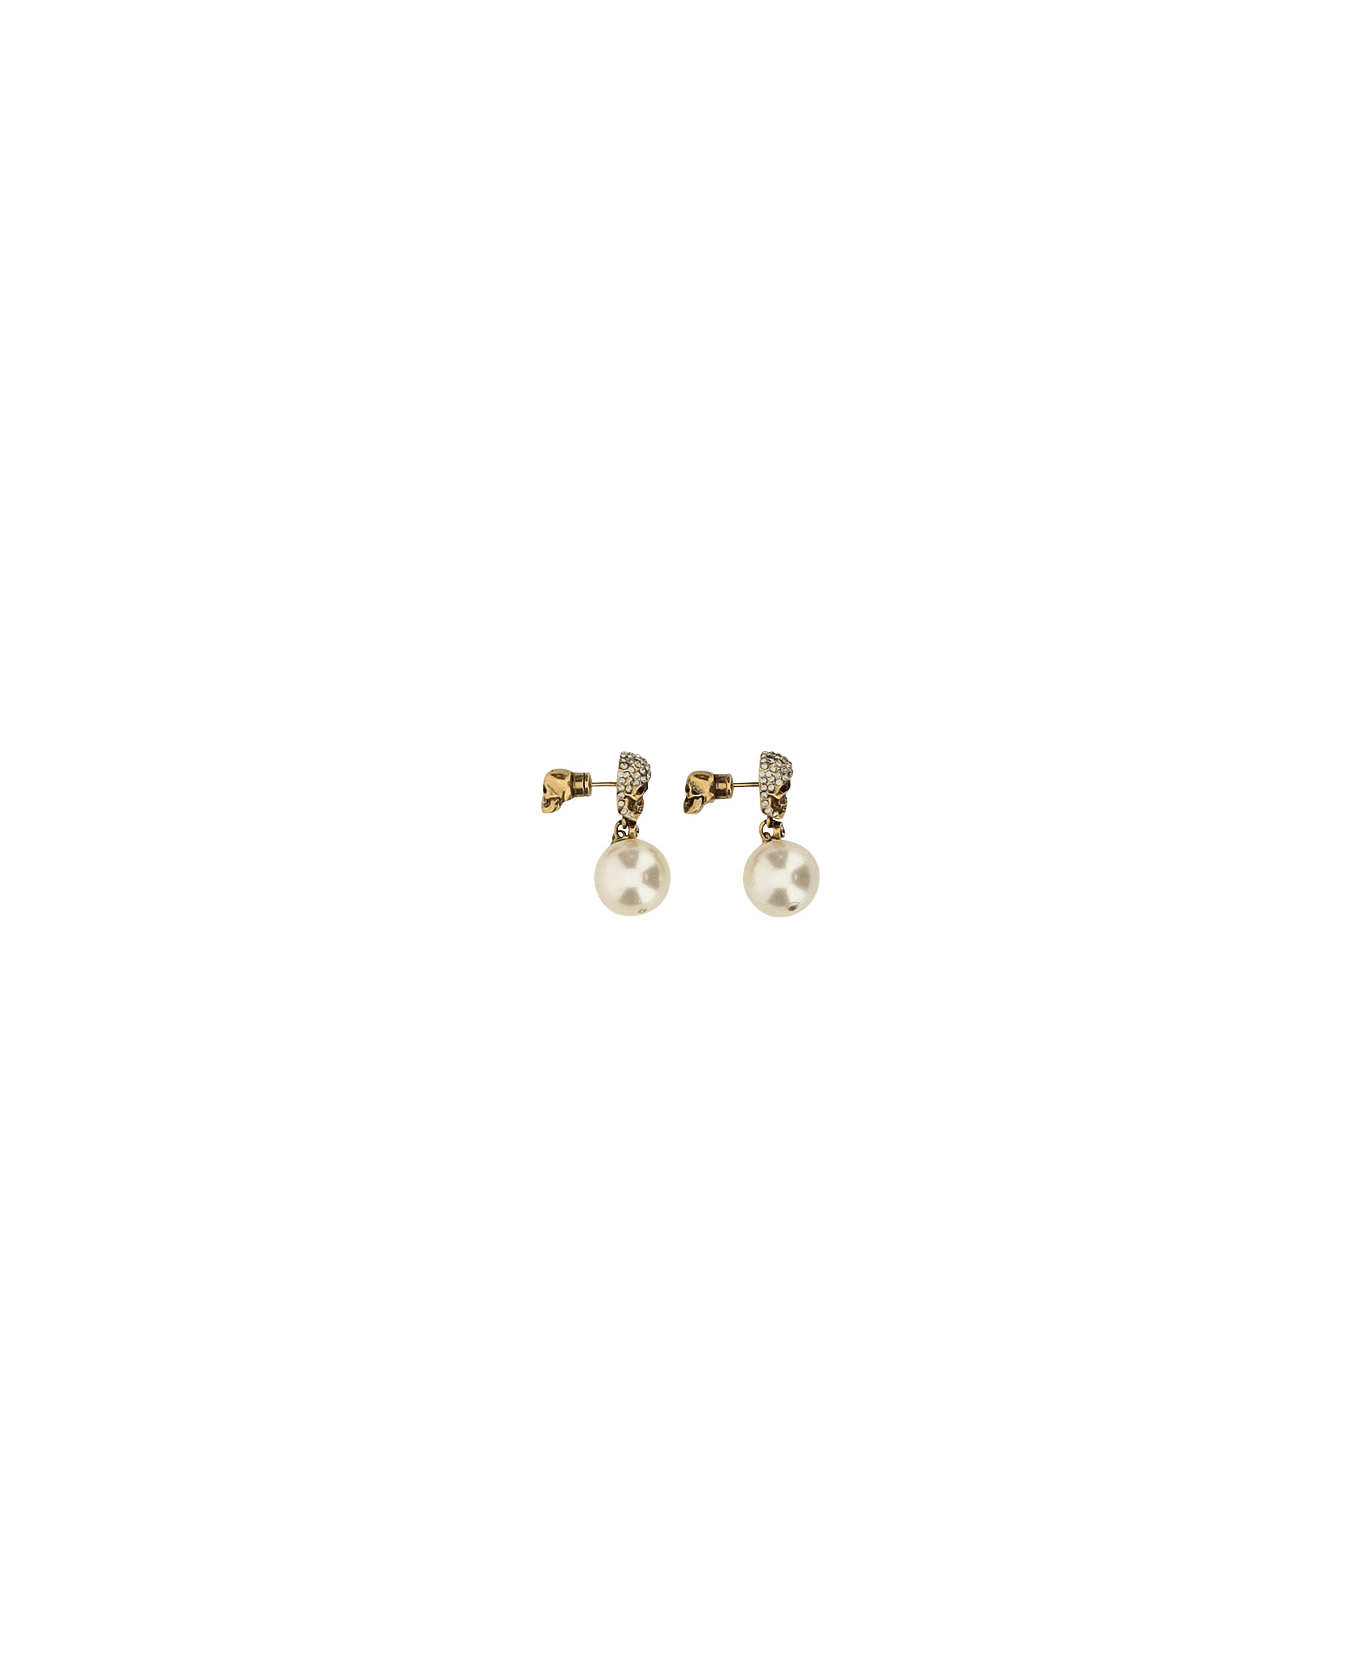 Alexander McQueen Pearl Earrings - Antique gold